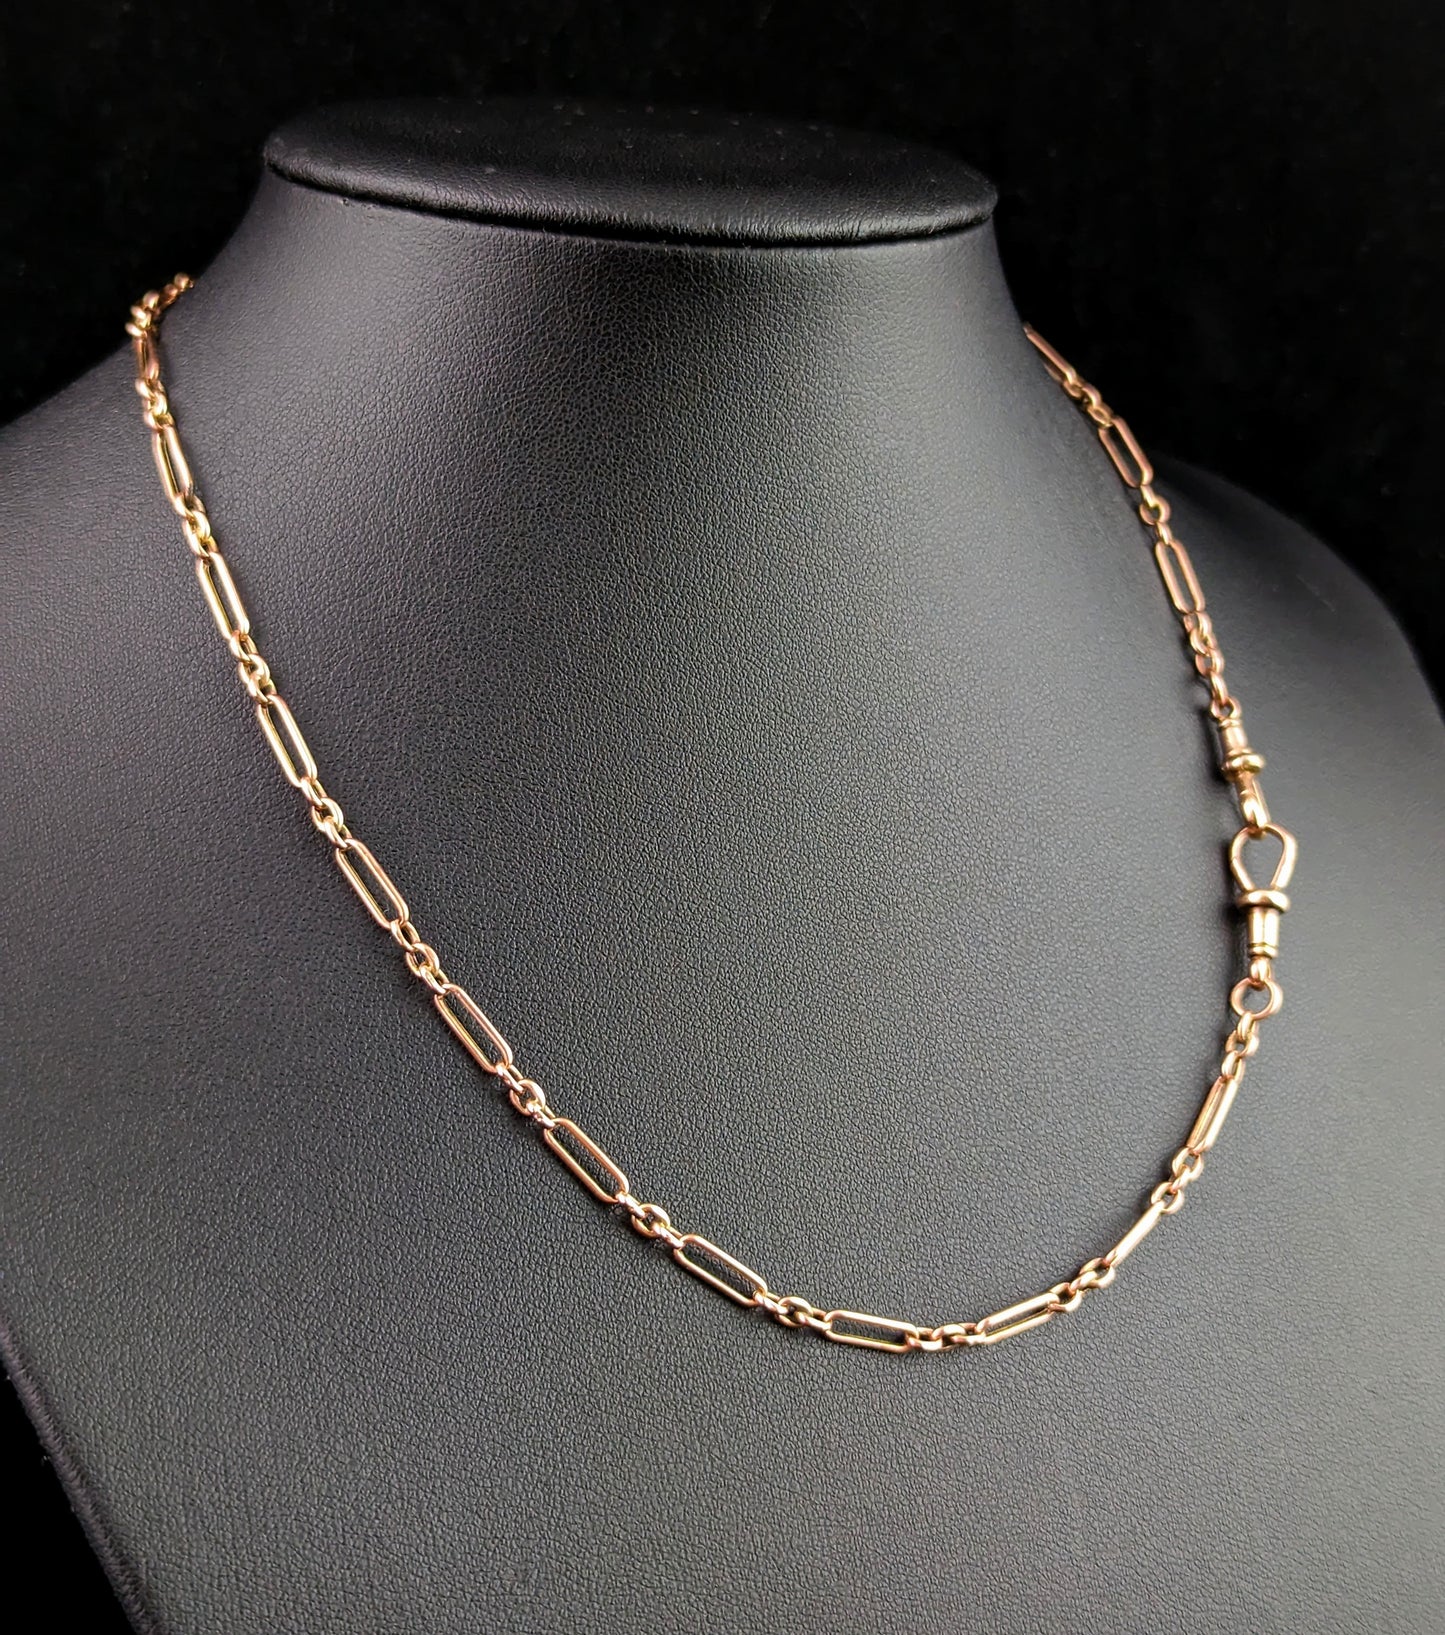 Antique 9ct Rose gold Albert chain, necklace, trombone link